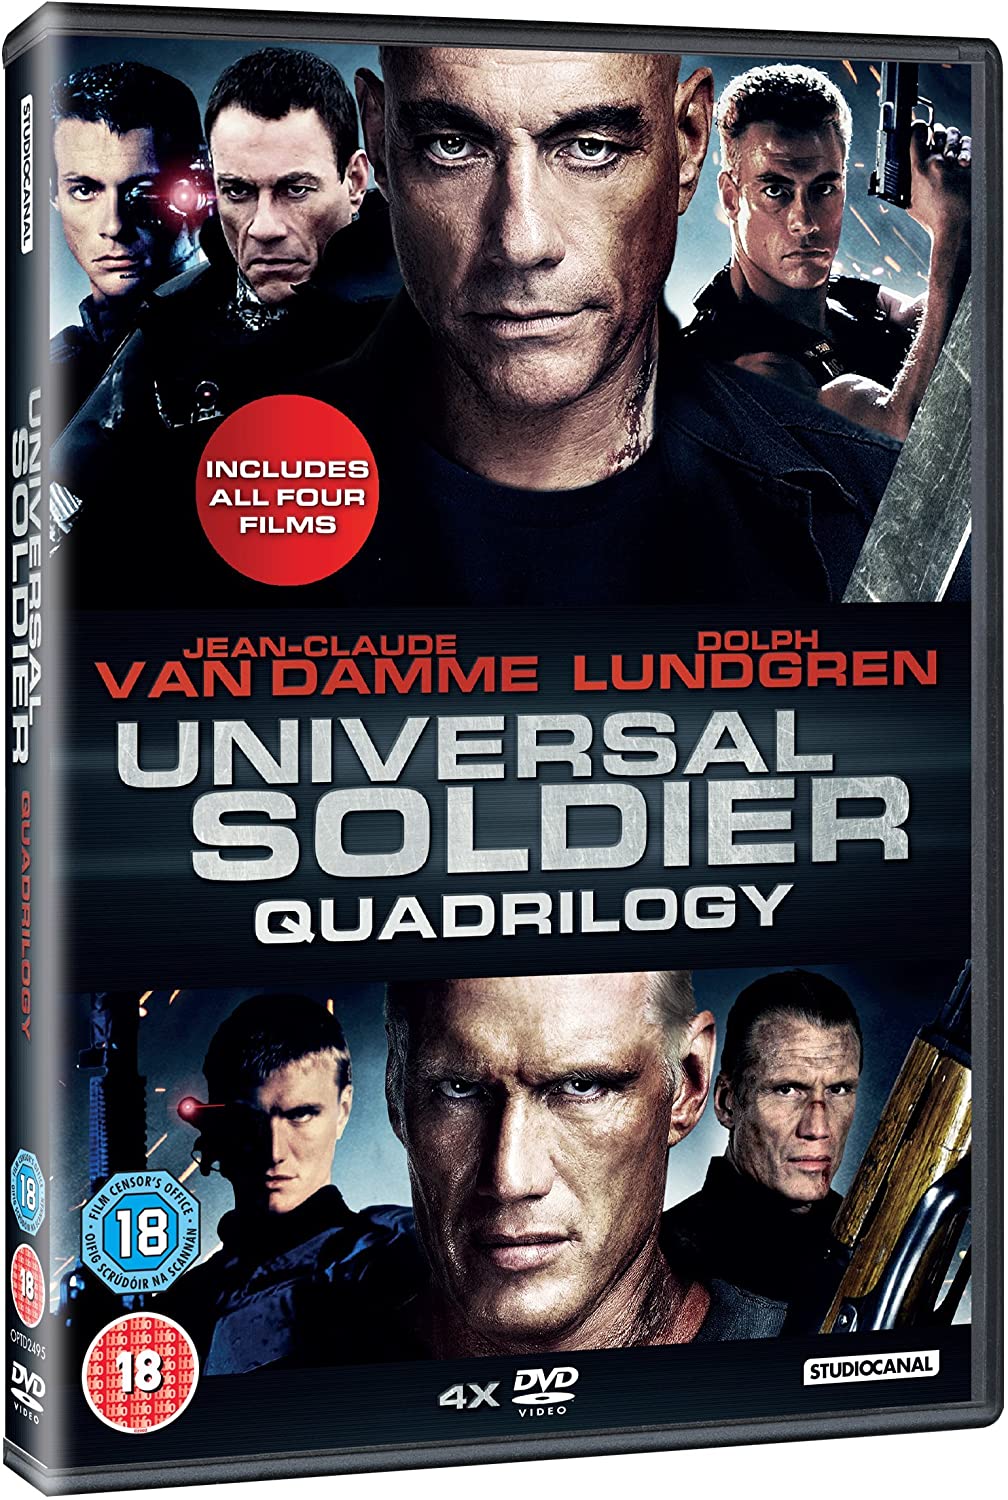 Universal Soldier Quadrilogy [1992] - Action/Sci-fi [DVD]